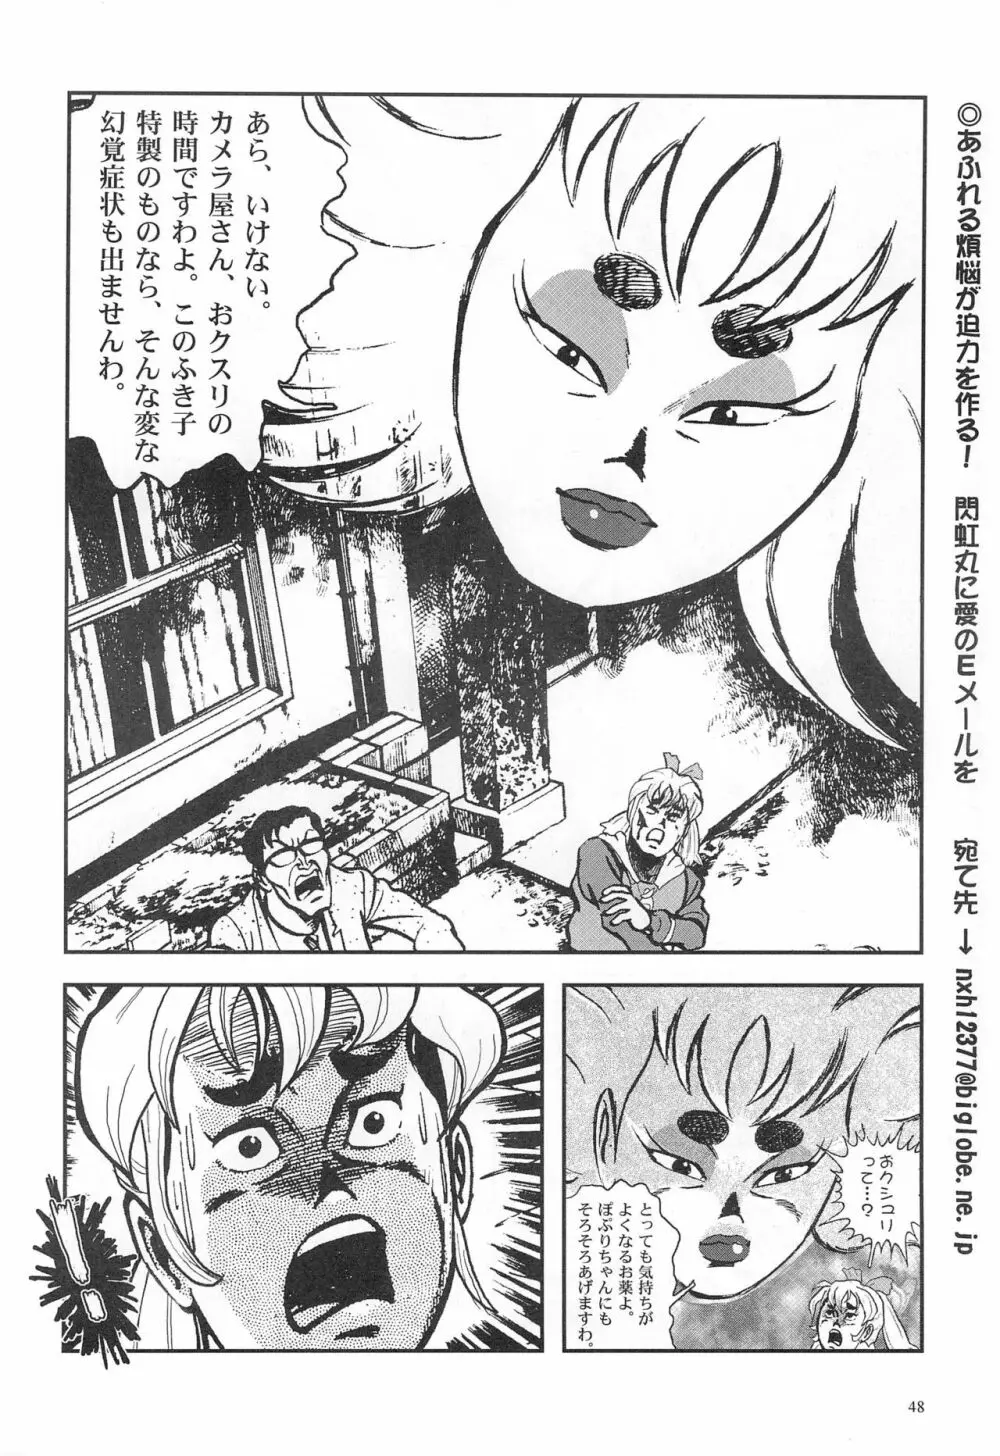 閃虹丸作品集 Vol.1 48ページ